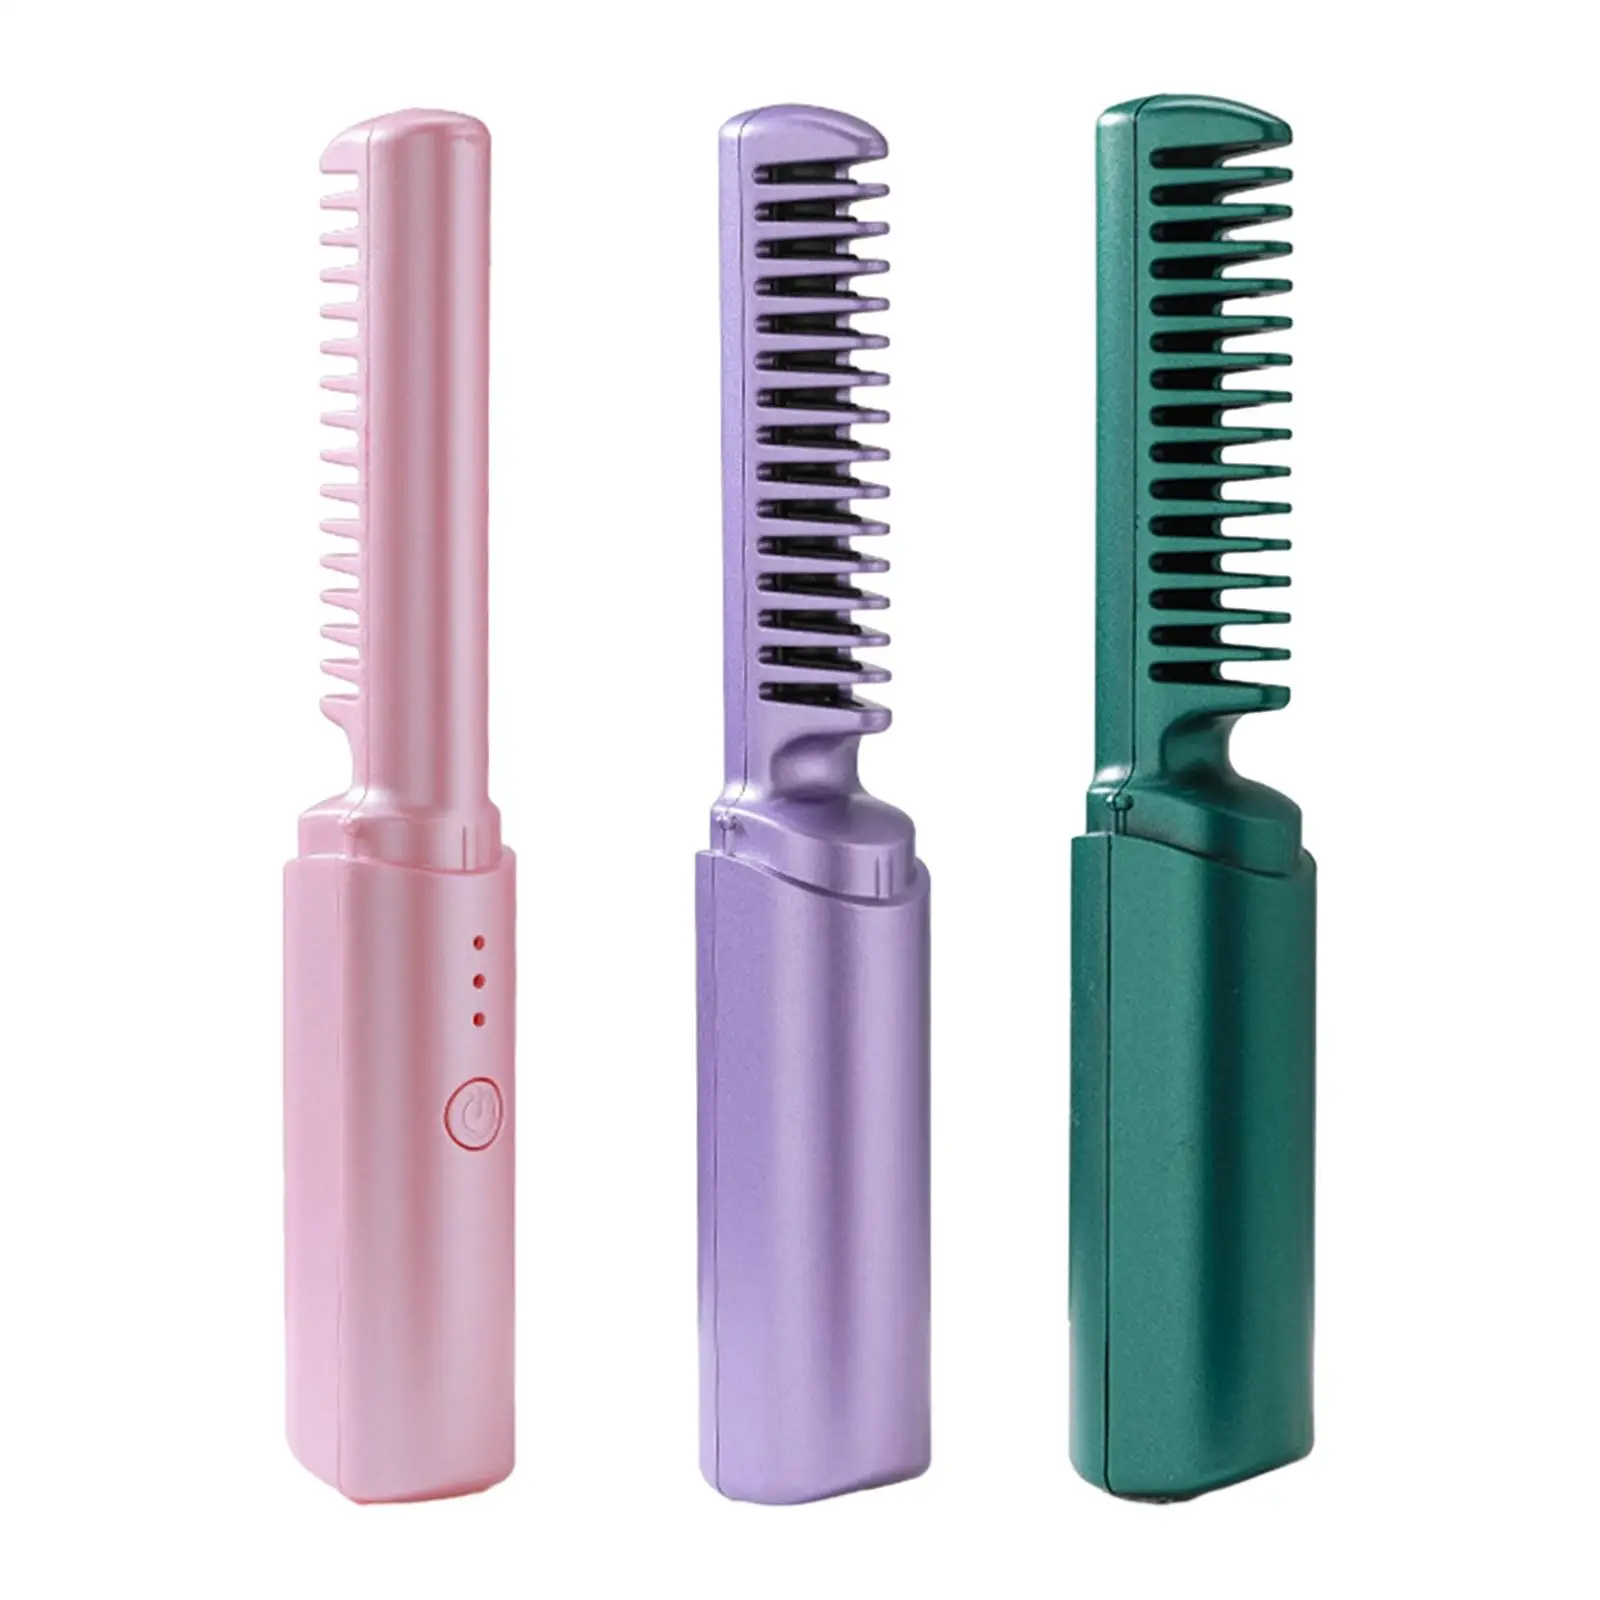 Cordless Hair Straightener Straightening Brush, USB Charging, Portable Hair Straightening Iron Comb for Home